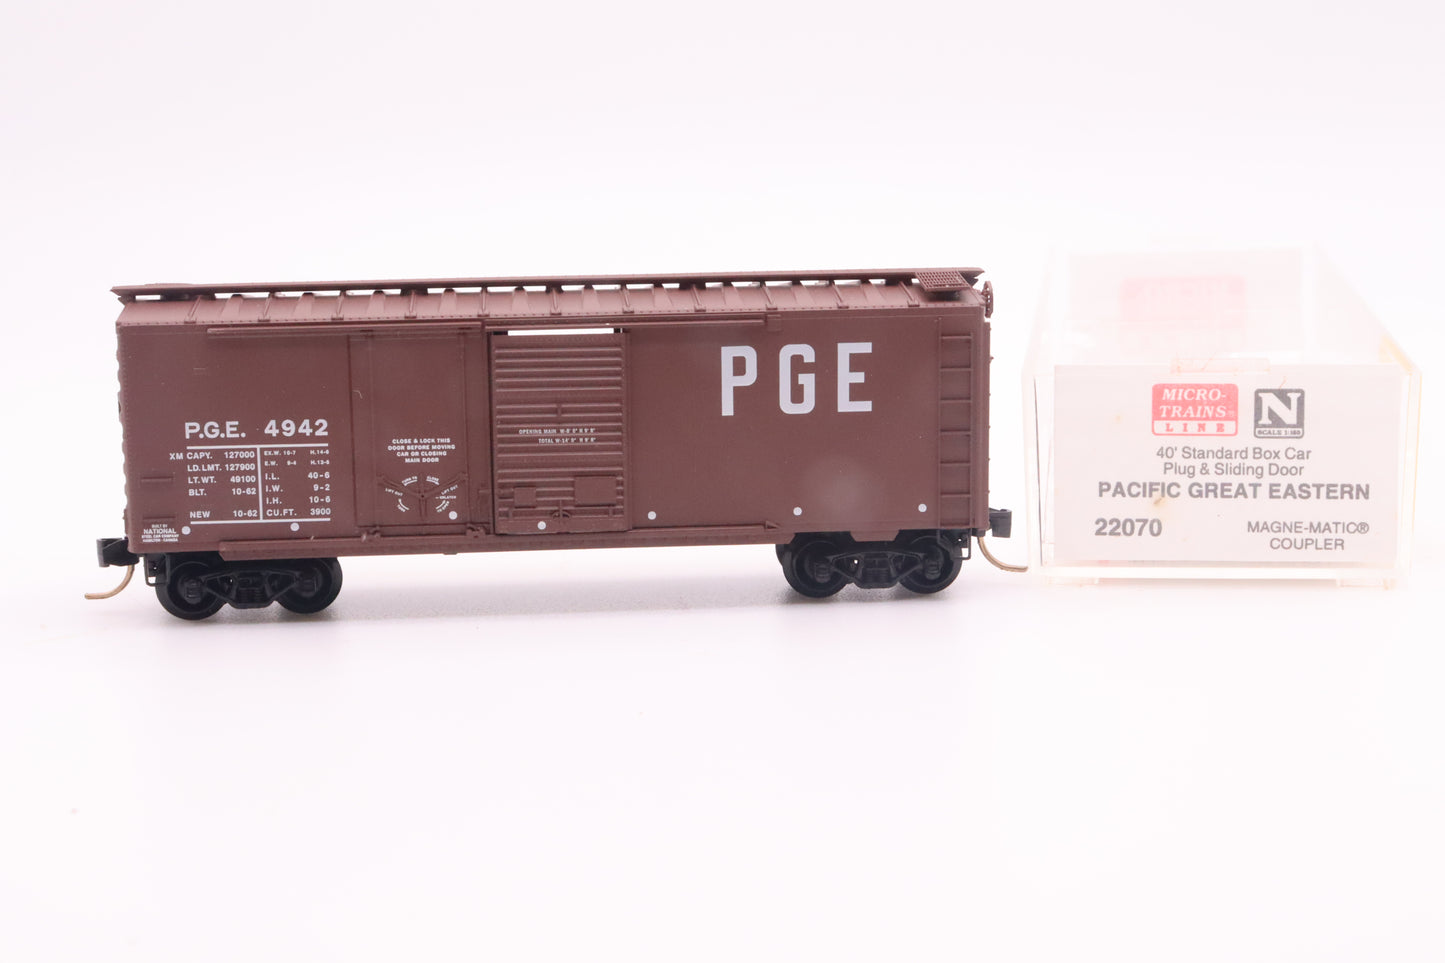 MTL-22070 - 40' Standard Boxcar Plug & Sliding Door - Pacific Great Eastern - PGE-4942